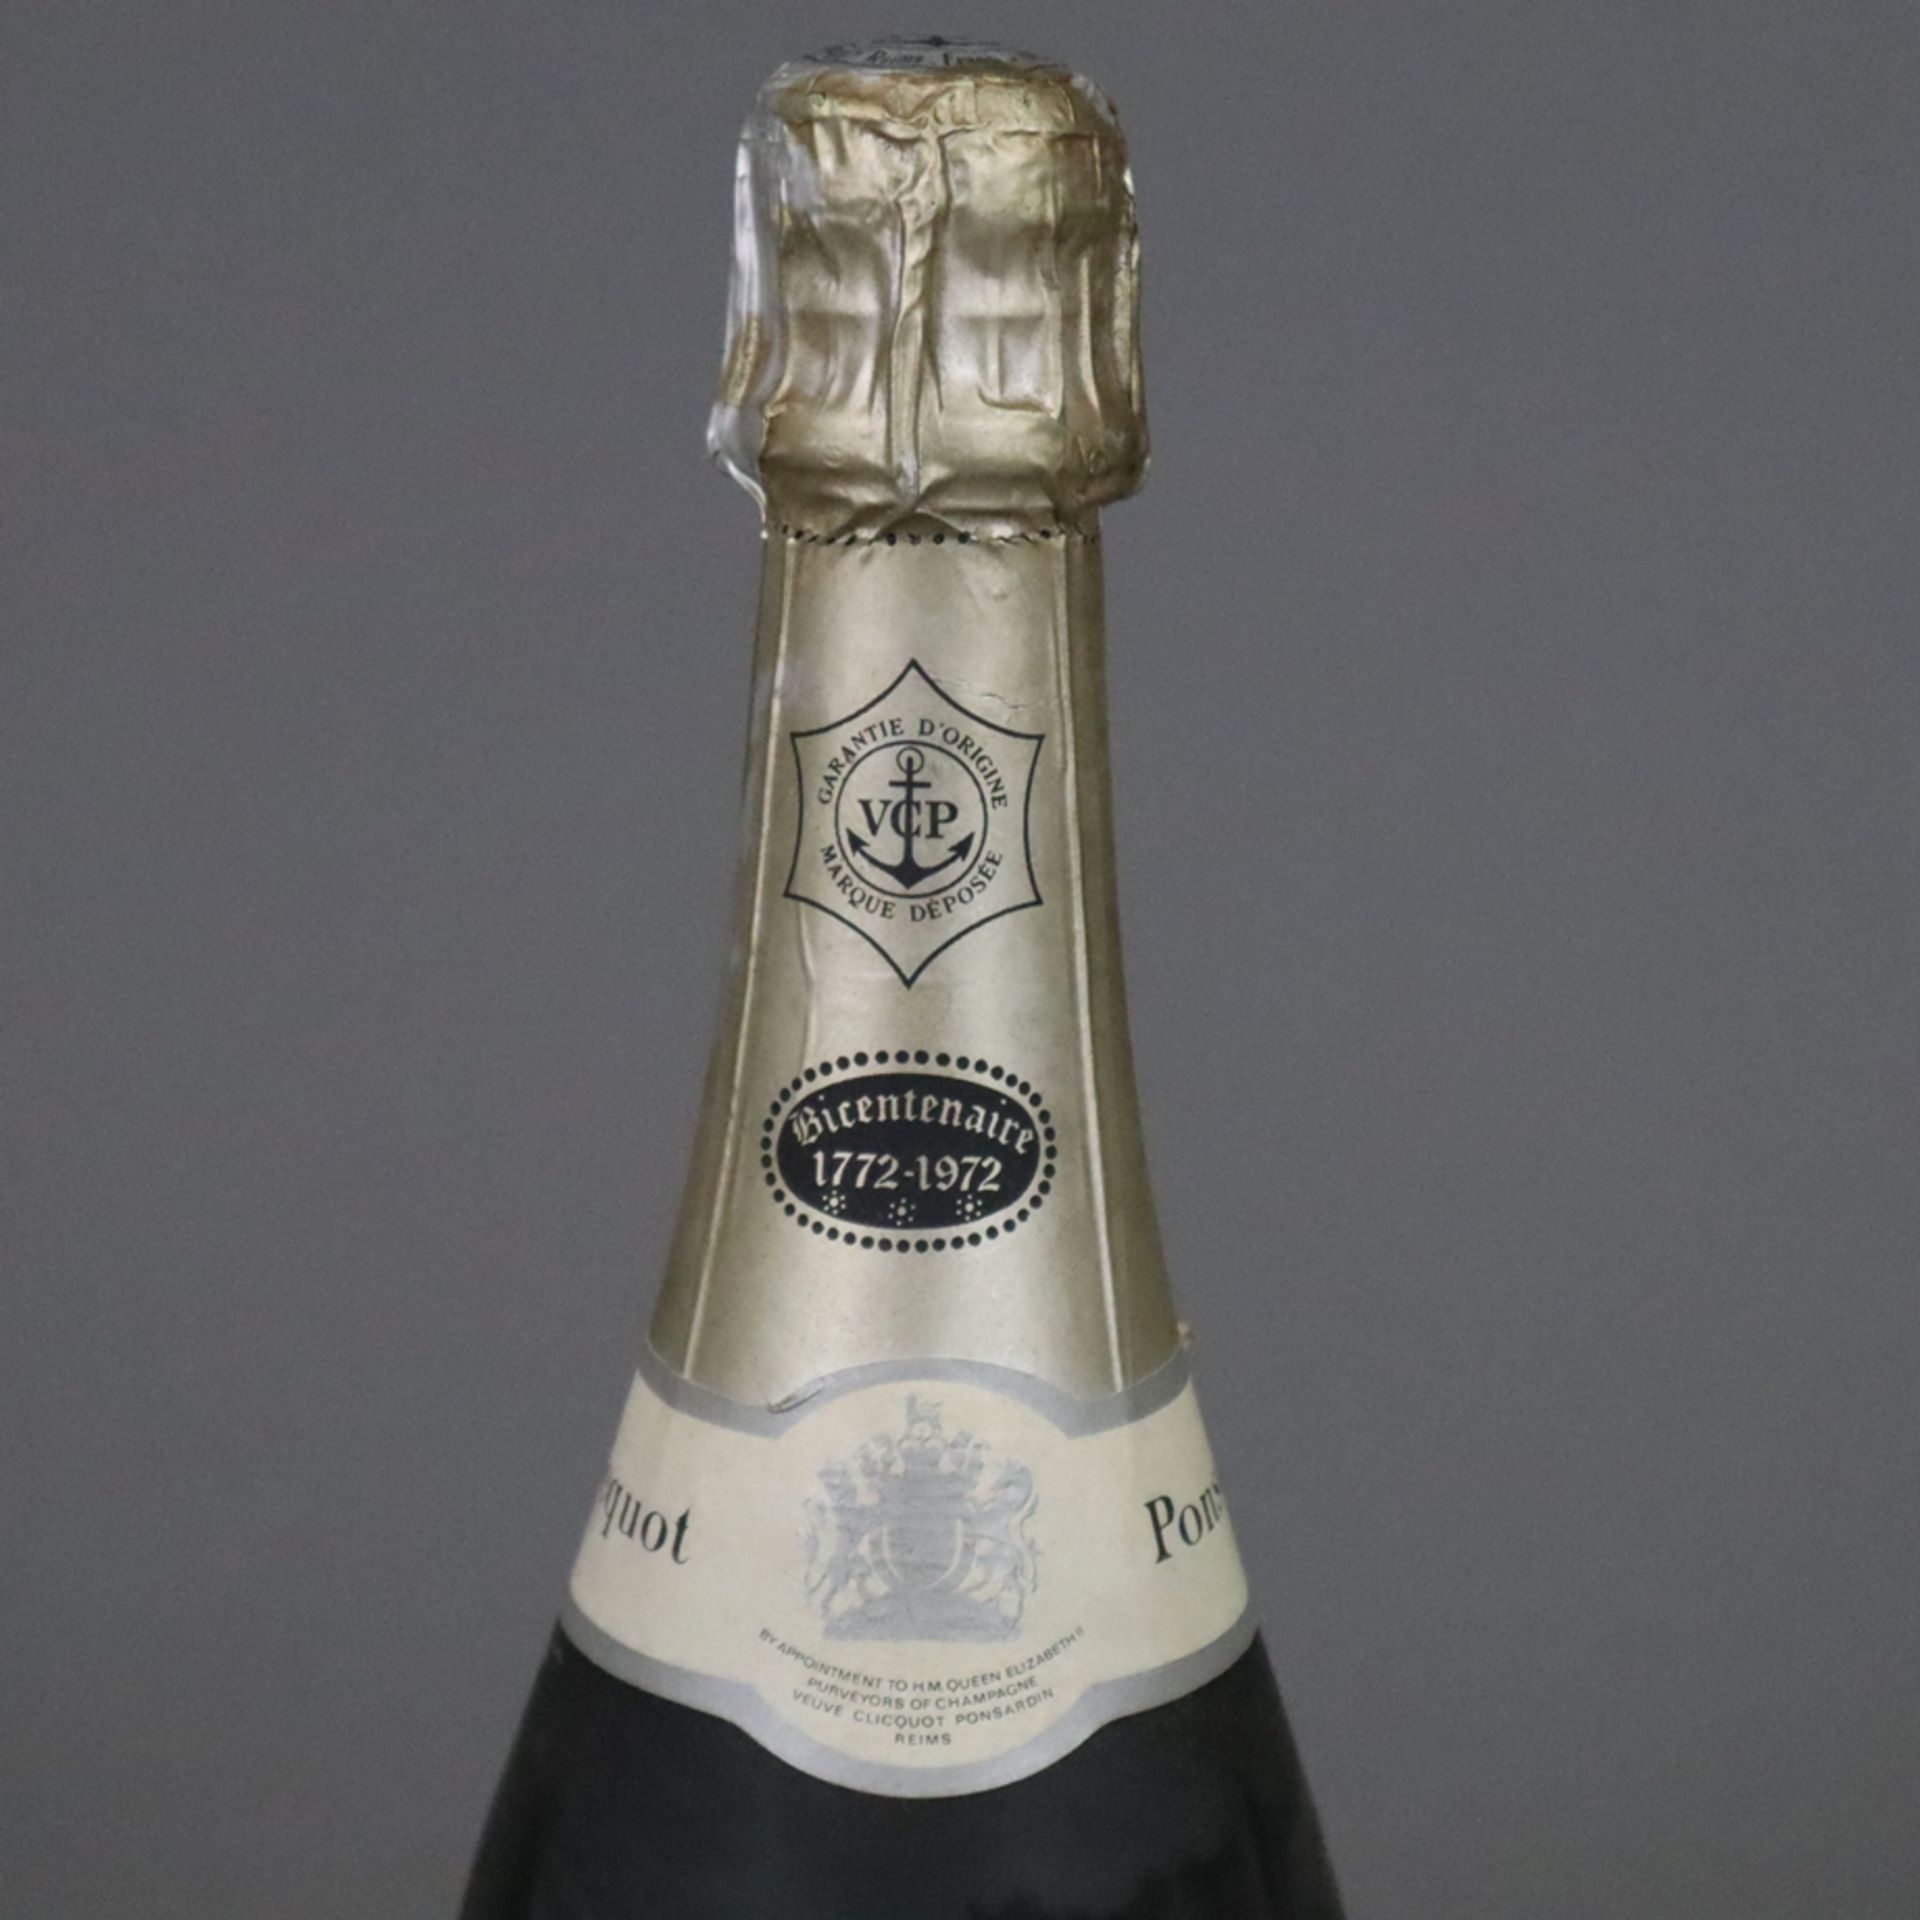 Champagner - Veuve Clicquot Ponsardin Bicentenaire 1772-1972 Brut, Reims, France, 750ml, Flasche ve - Bild 2 aus 5